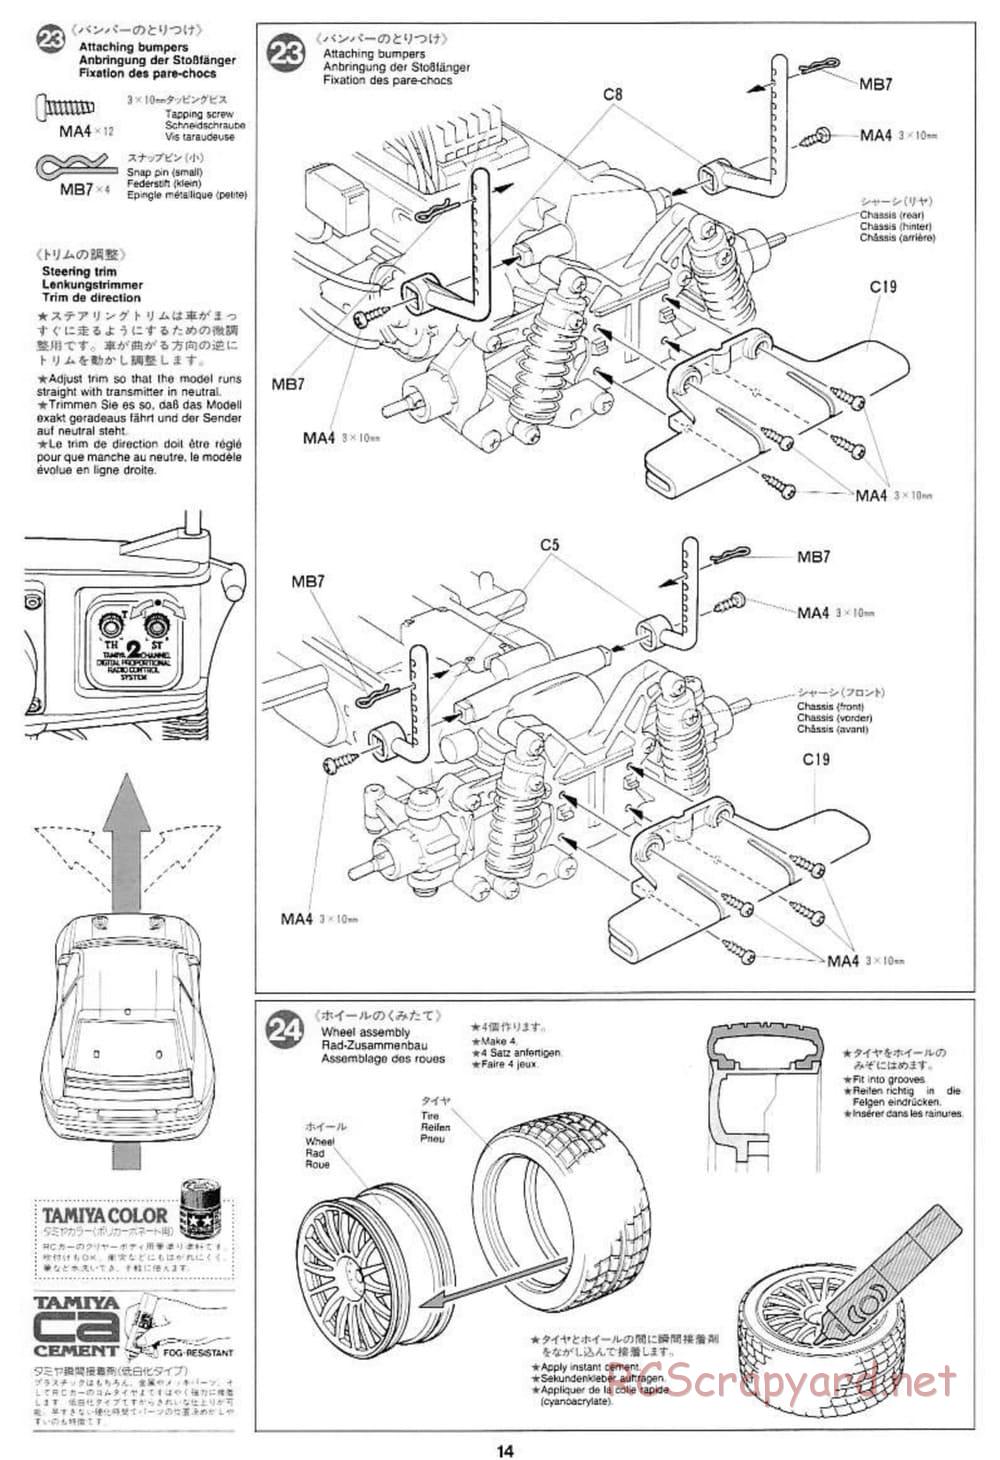 Tamiya - Ford Escort WRC - TL-01 Chassis - Manual - Page 14